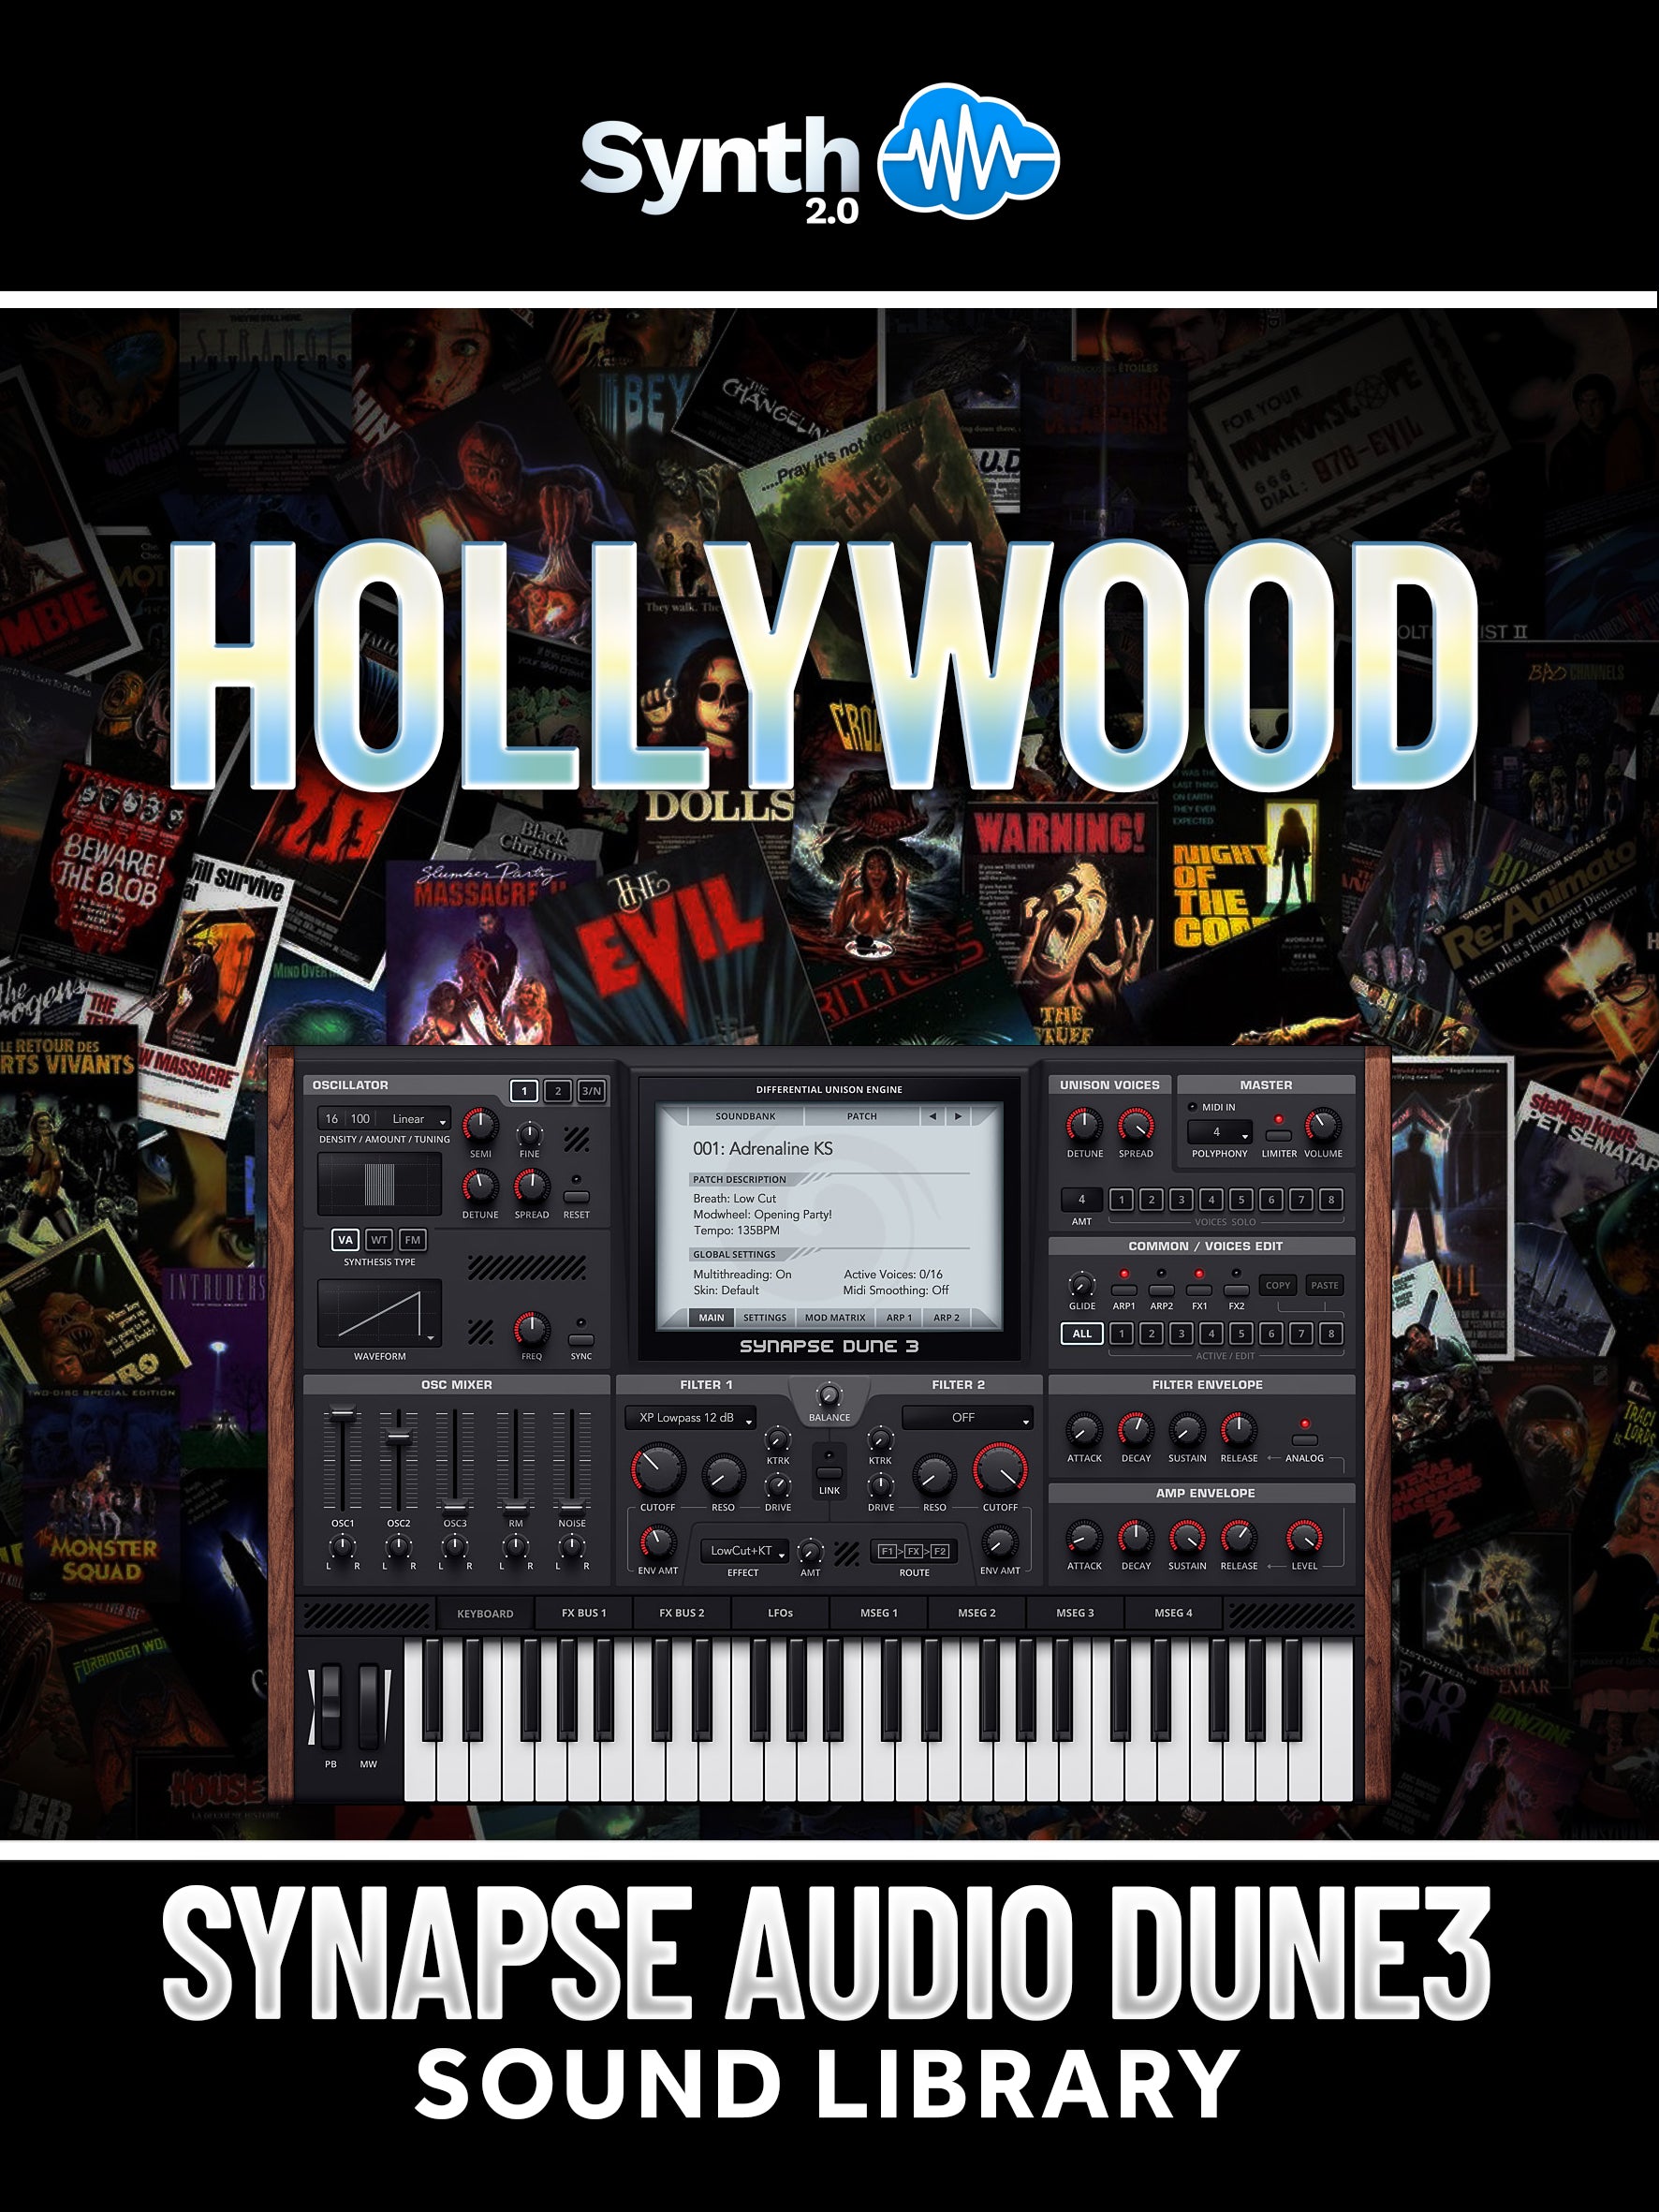 OTL071 - ( Bundle ) - Hollywood + Space Explorations - Synapse Audio Dune 3